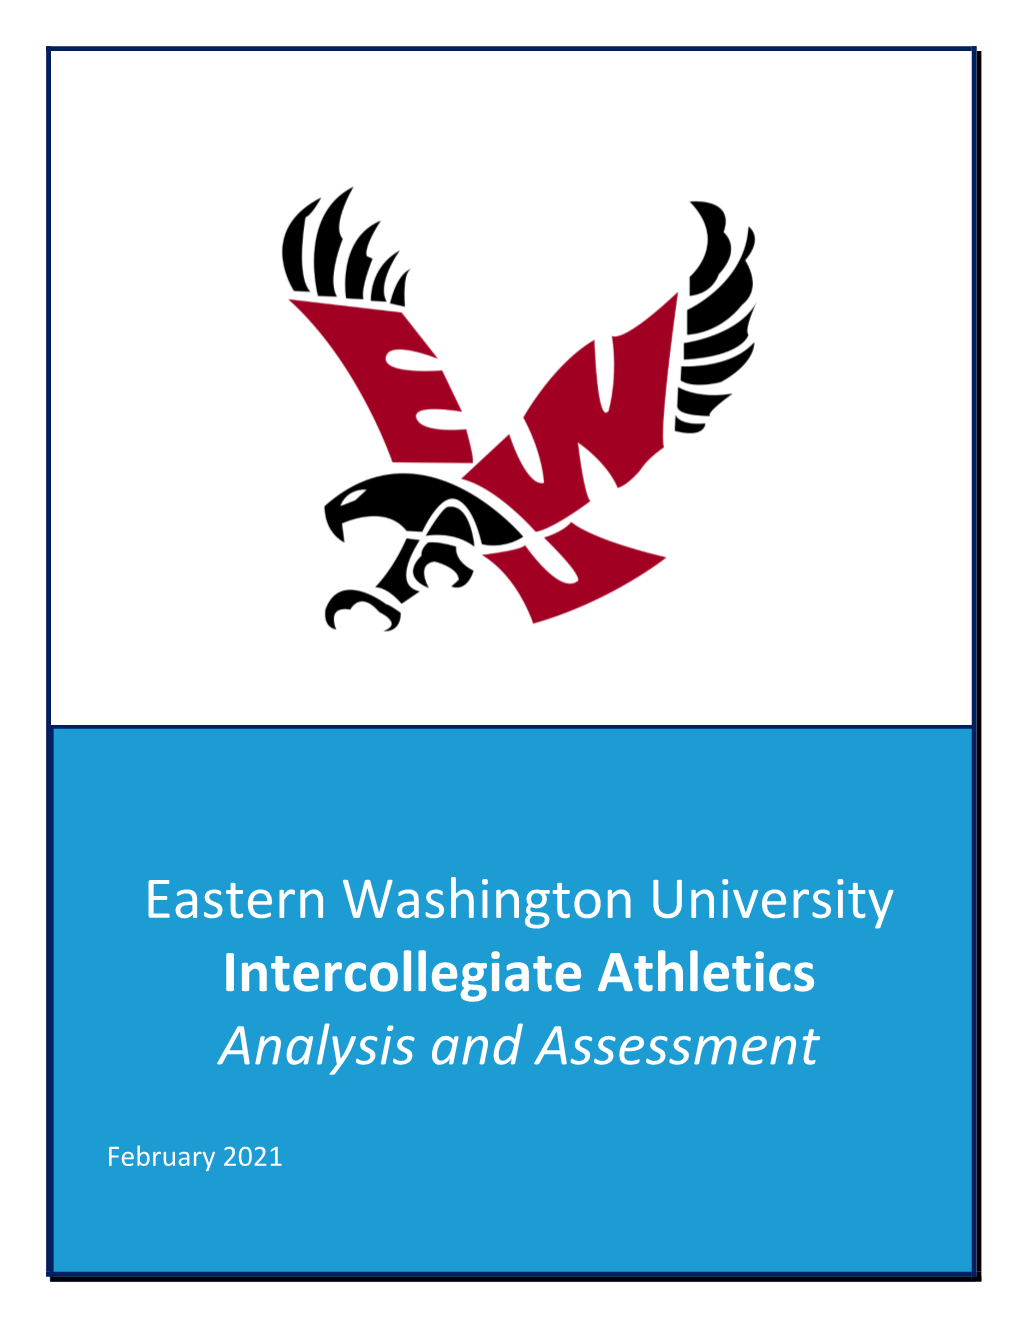 Eastern Washington University Intercollegiate Athletics Analysis and Assessment